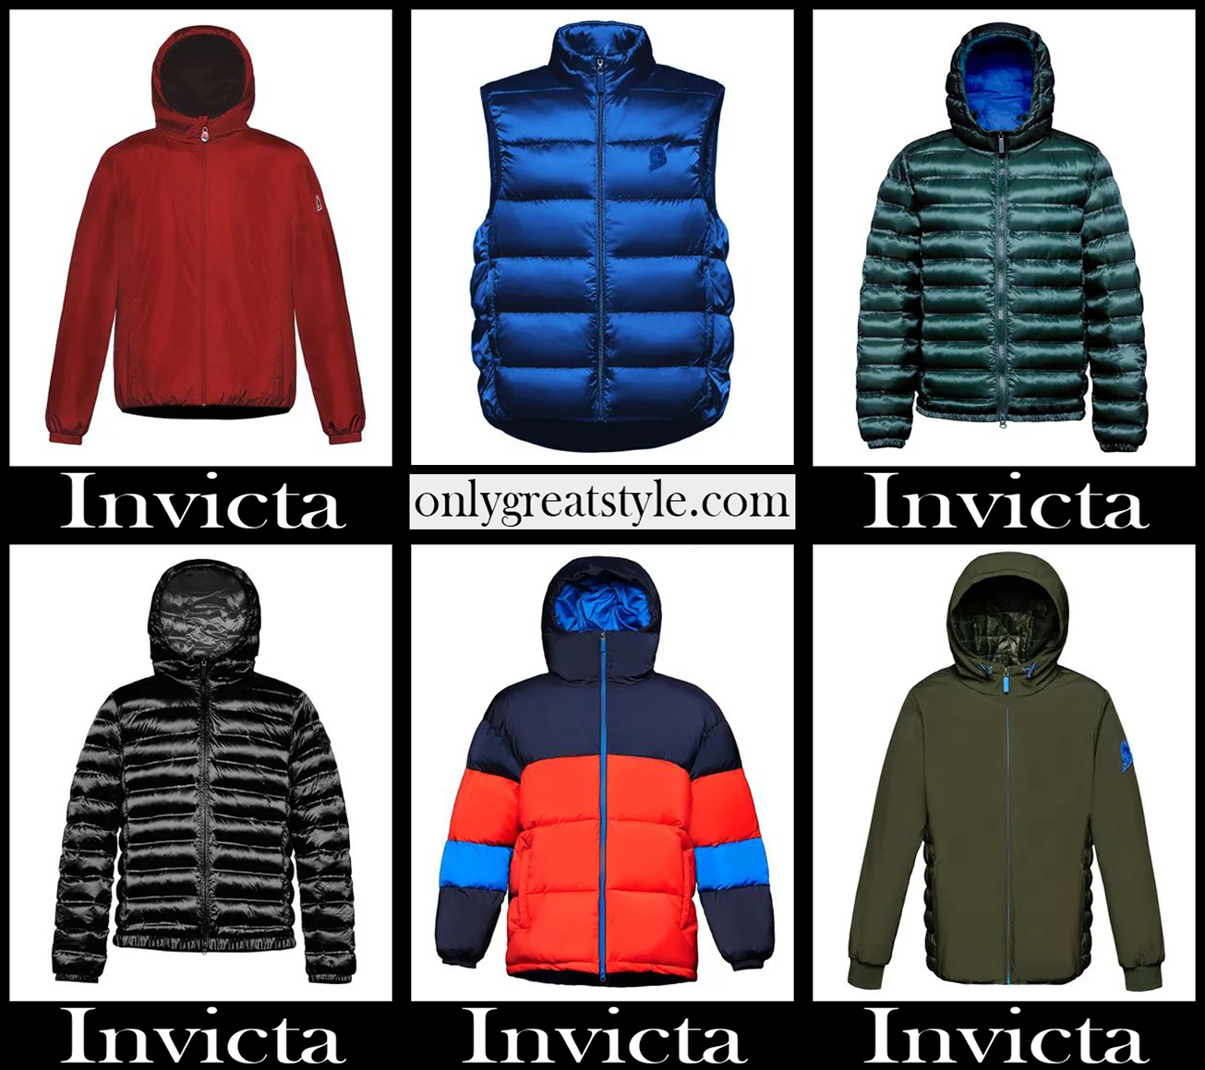 Invicta jackets 20 2021 fall winter mens clothing